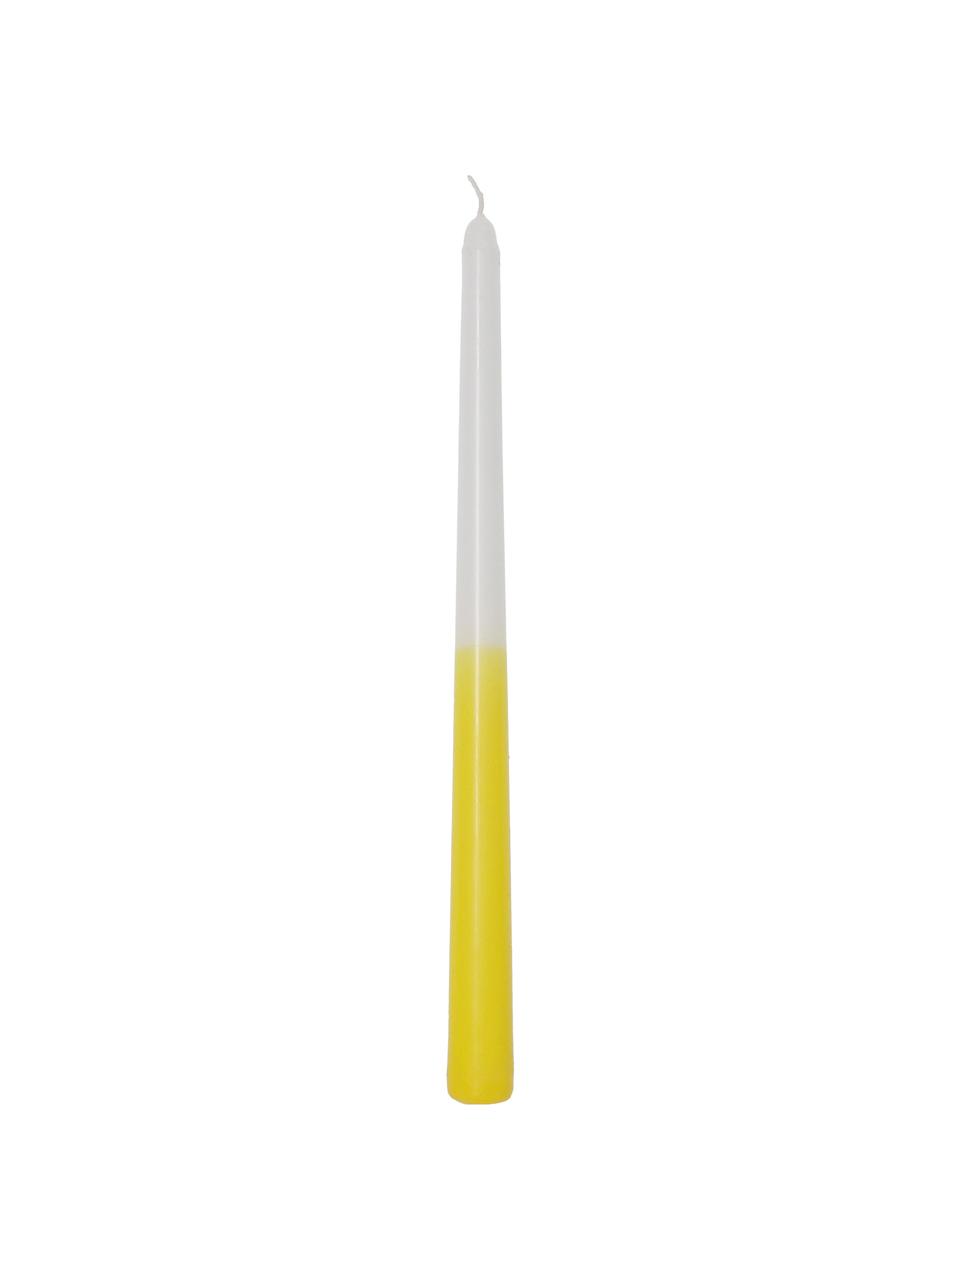 Candela bastone color giallo/bianco Dubli 4 pz, Cera, Giallo, bianco, Ø 2 x Alt. 31 cm